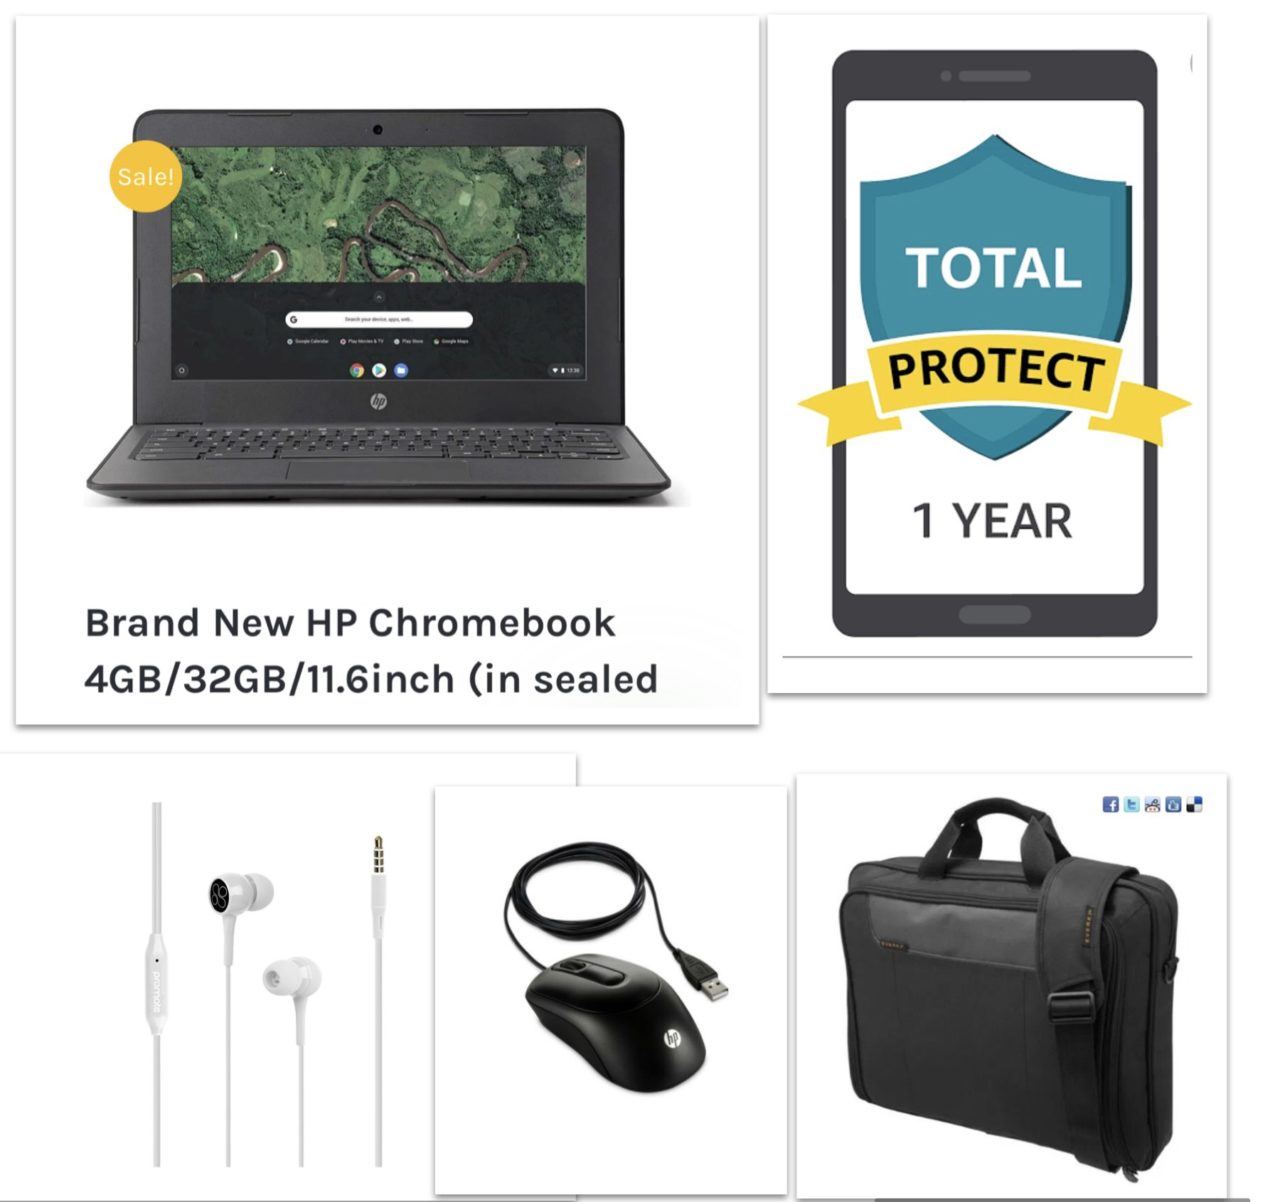 New HP Chromebook Bundle – Chromebook+Bag+Ear Phone+Mouse+12 Month Damage Protection